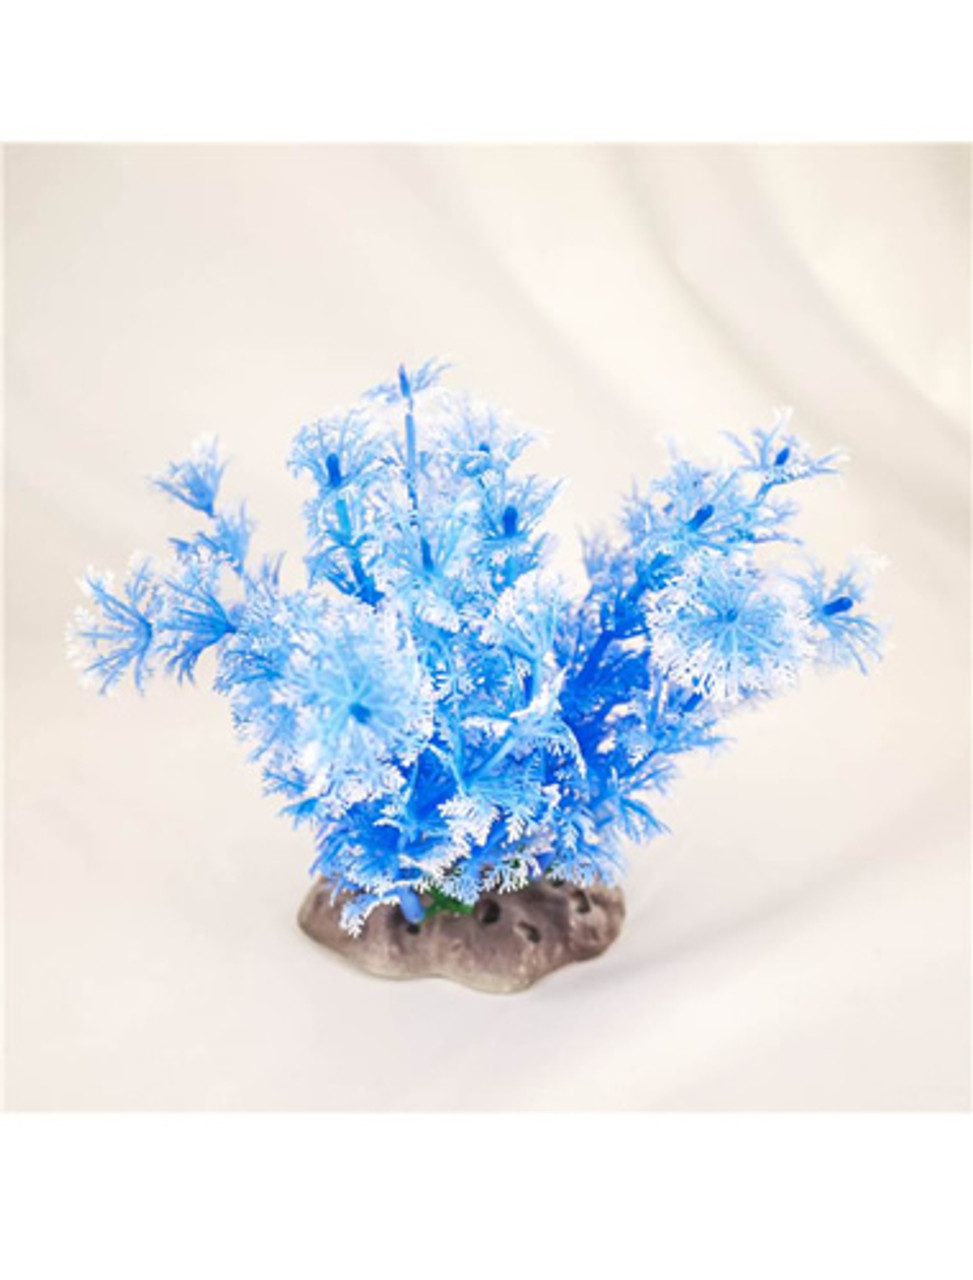 Artificial Aquarium Plant - Blue Snowdrop Small Image